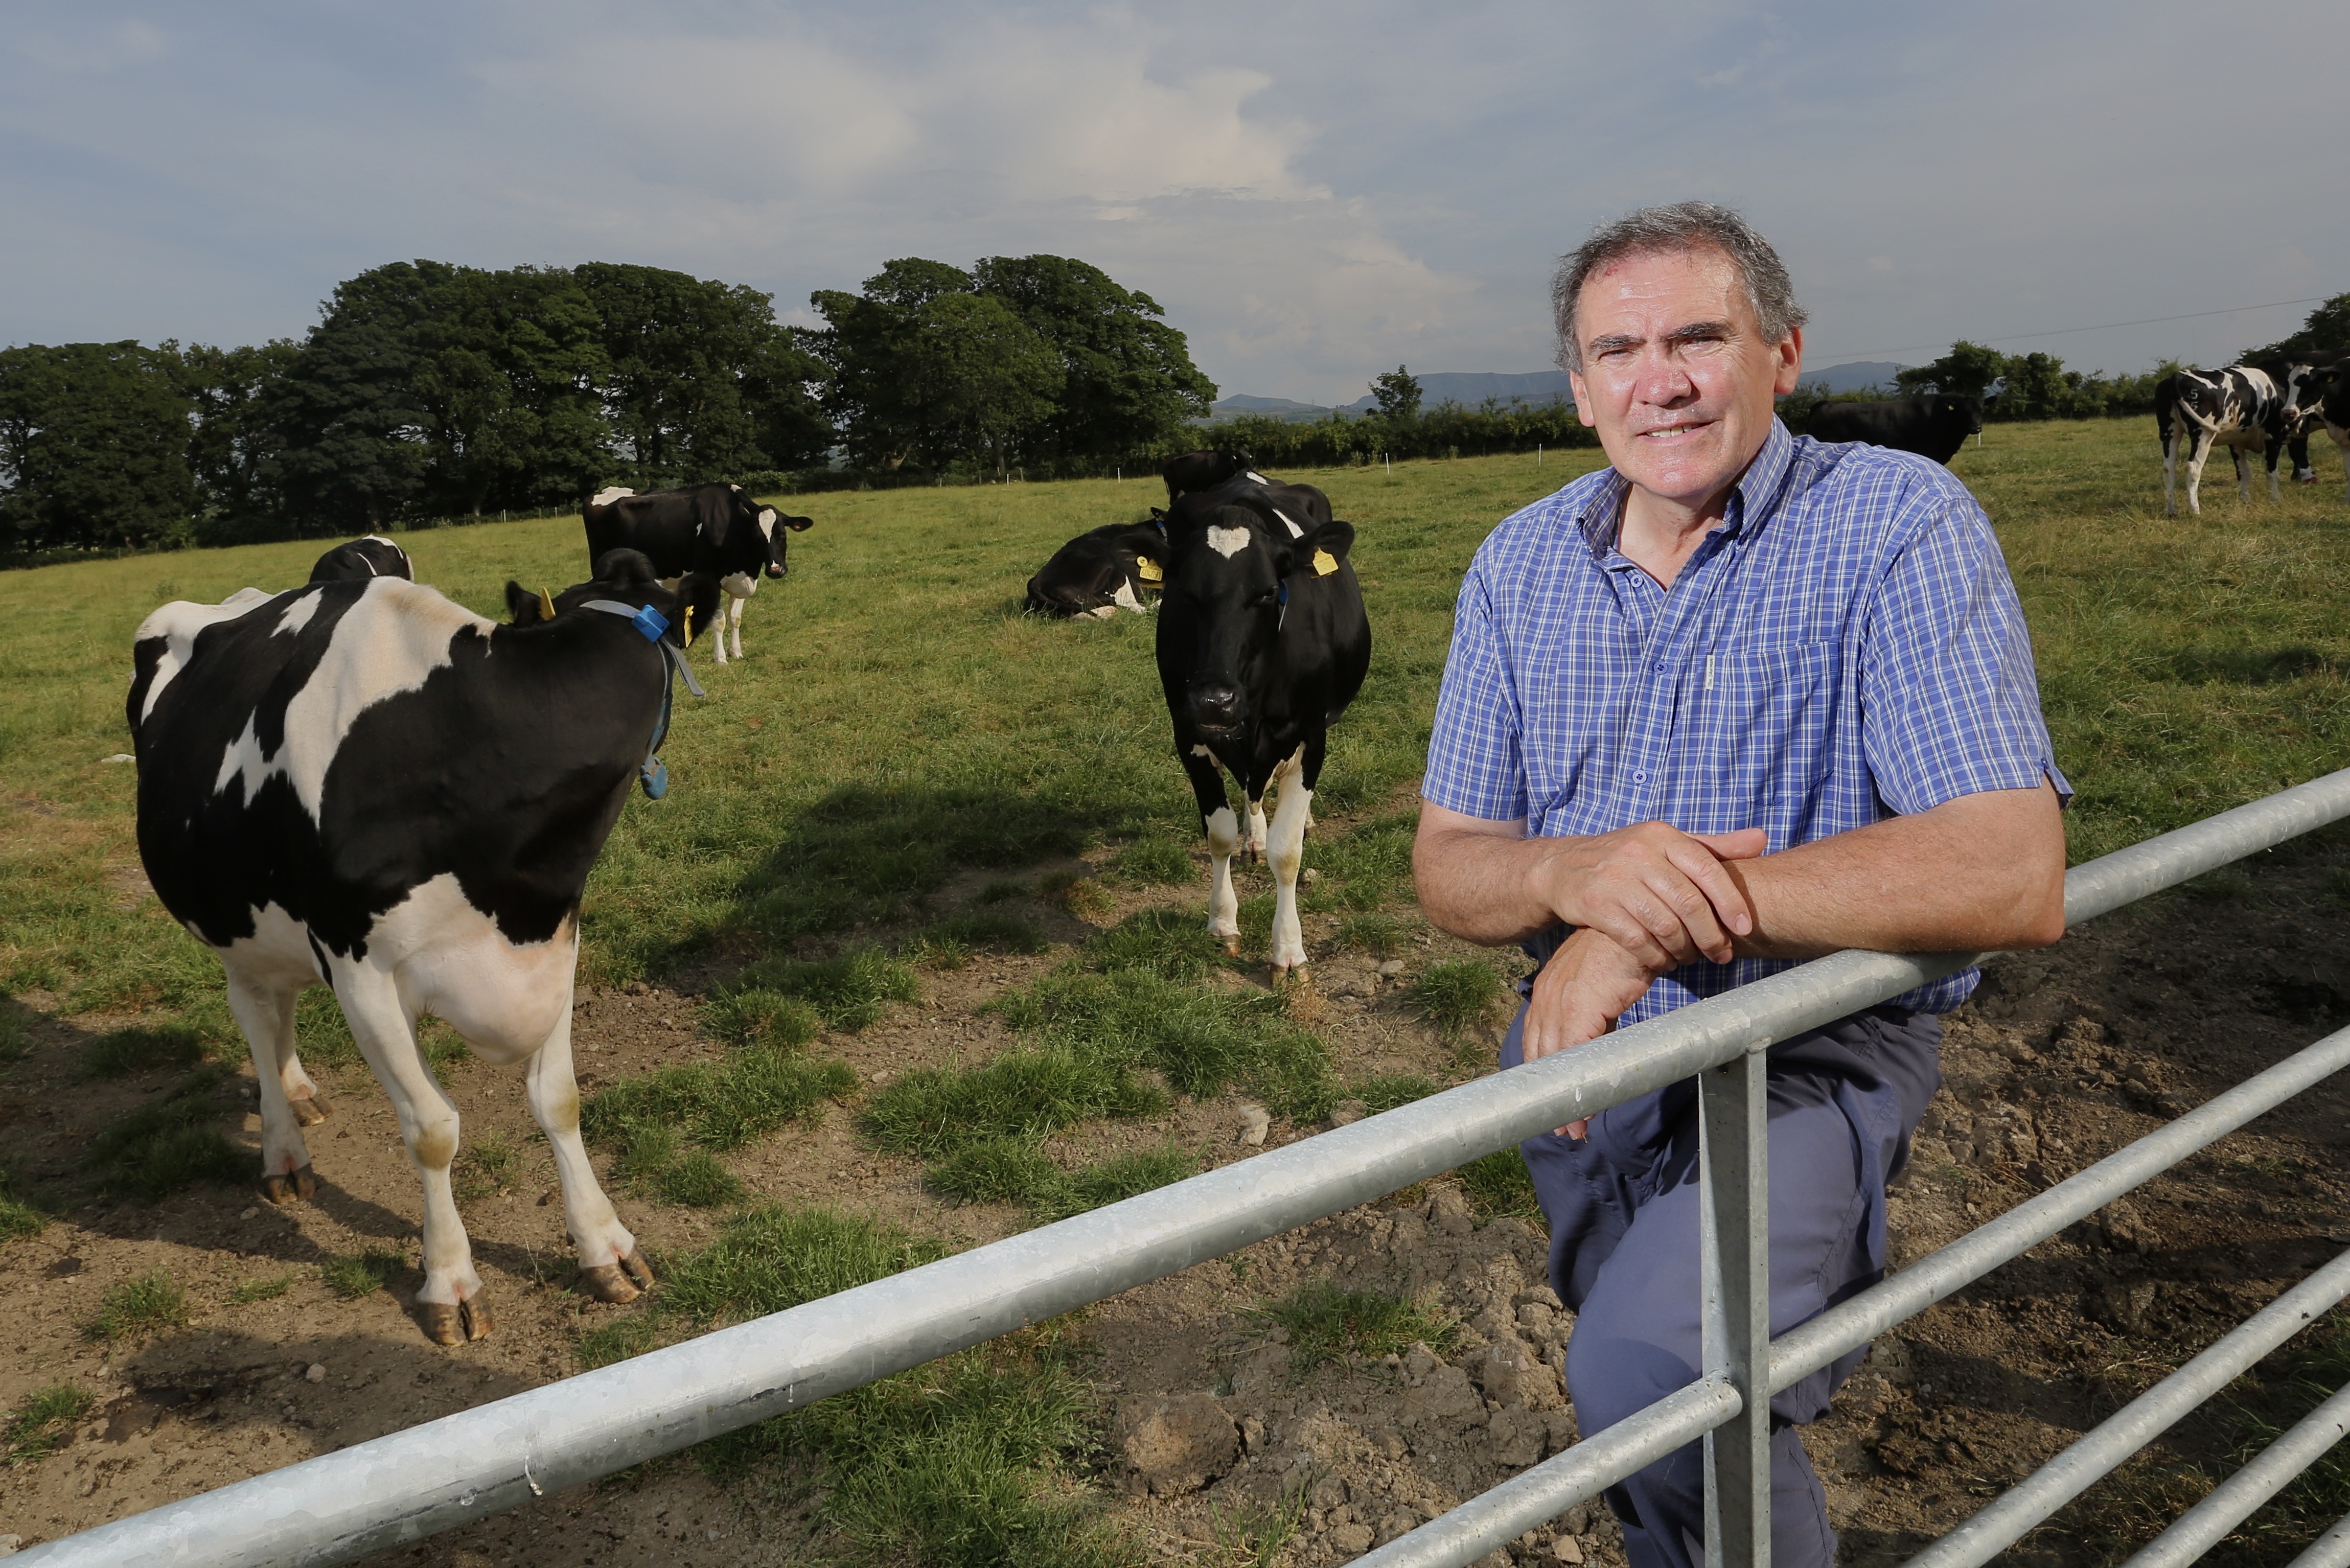 NFU Cymru President Aled Jones with cows in a field